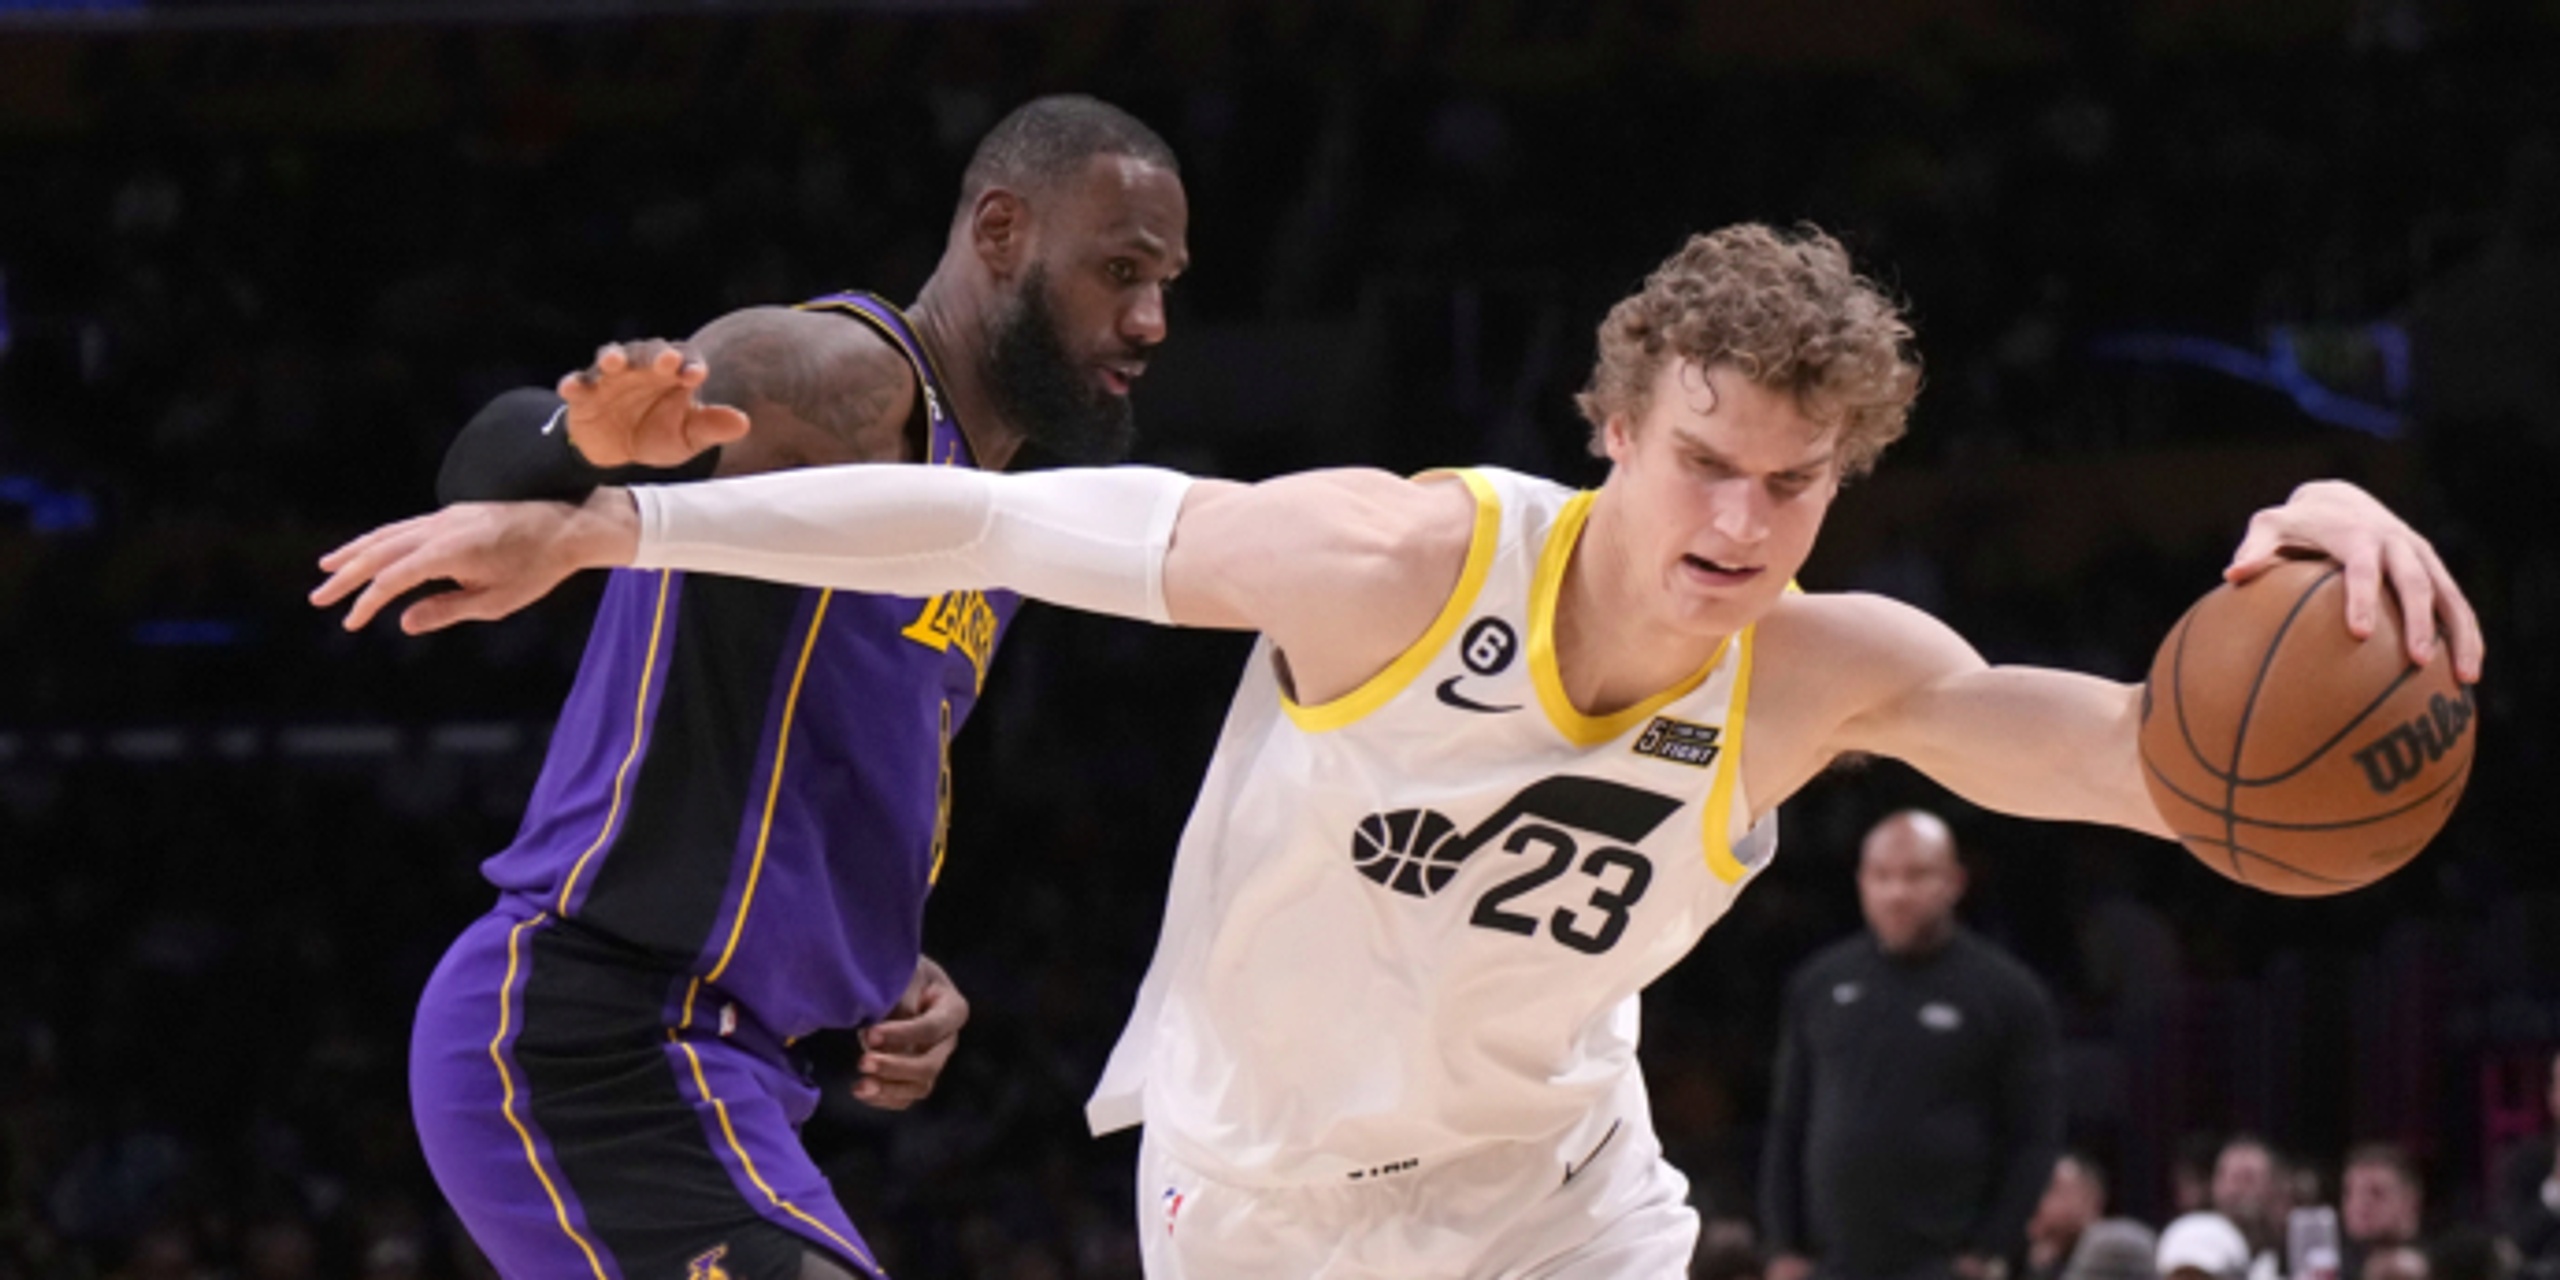 Markkanen leads surprising Jazz past Lakers, 130-116